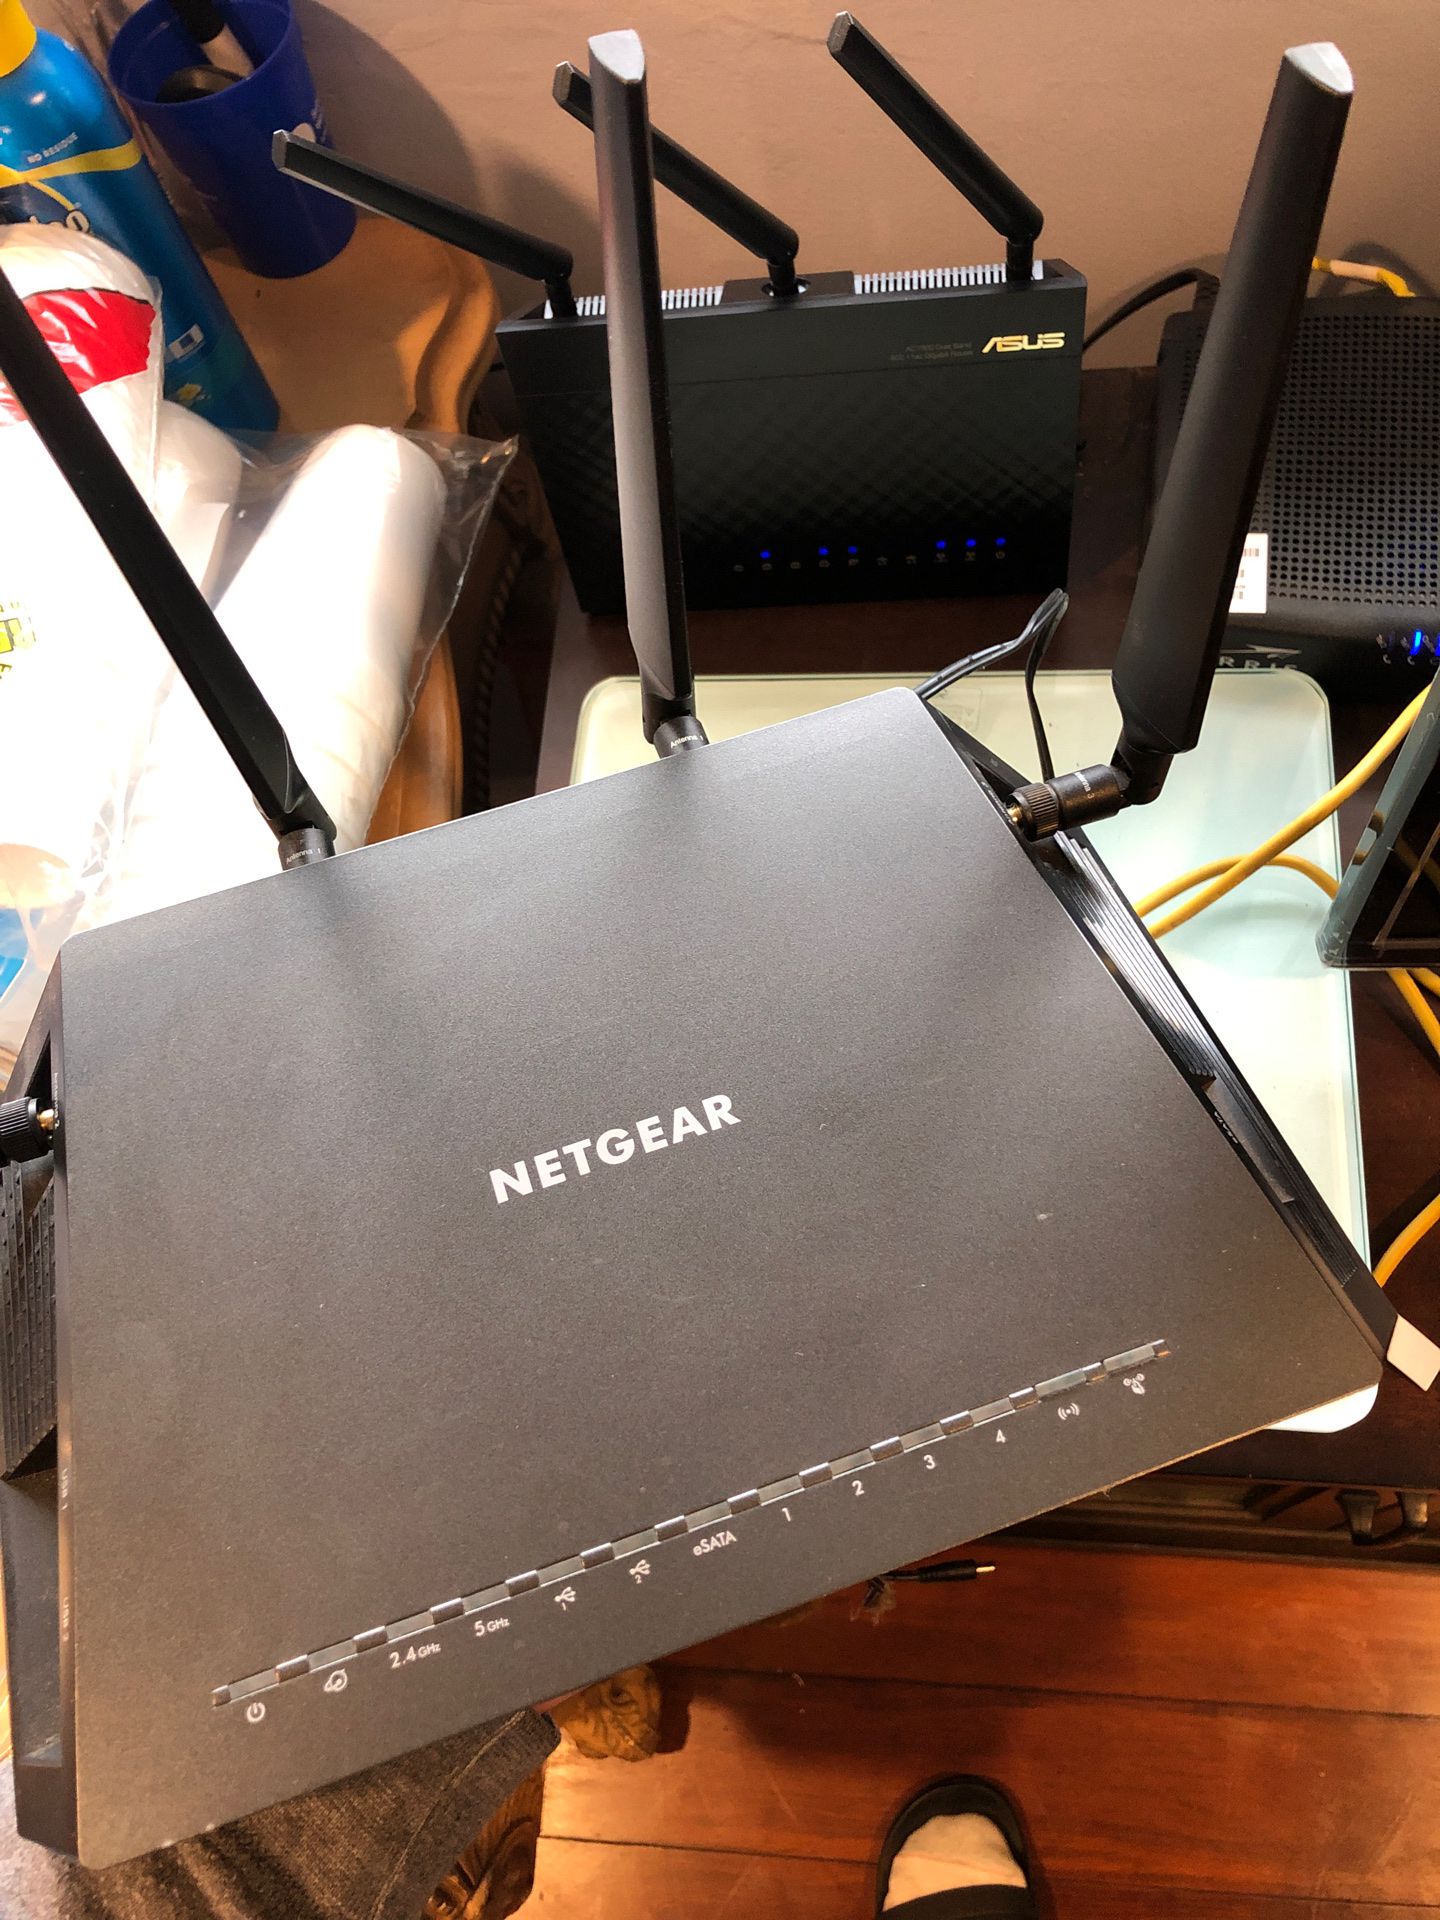 Netgear night hawk X4S AC2600 WiFi router